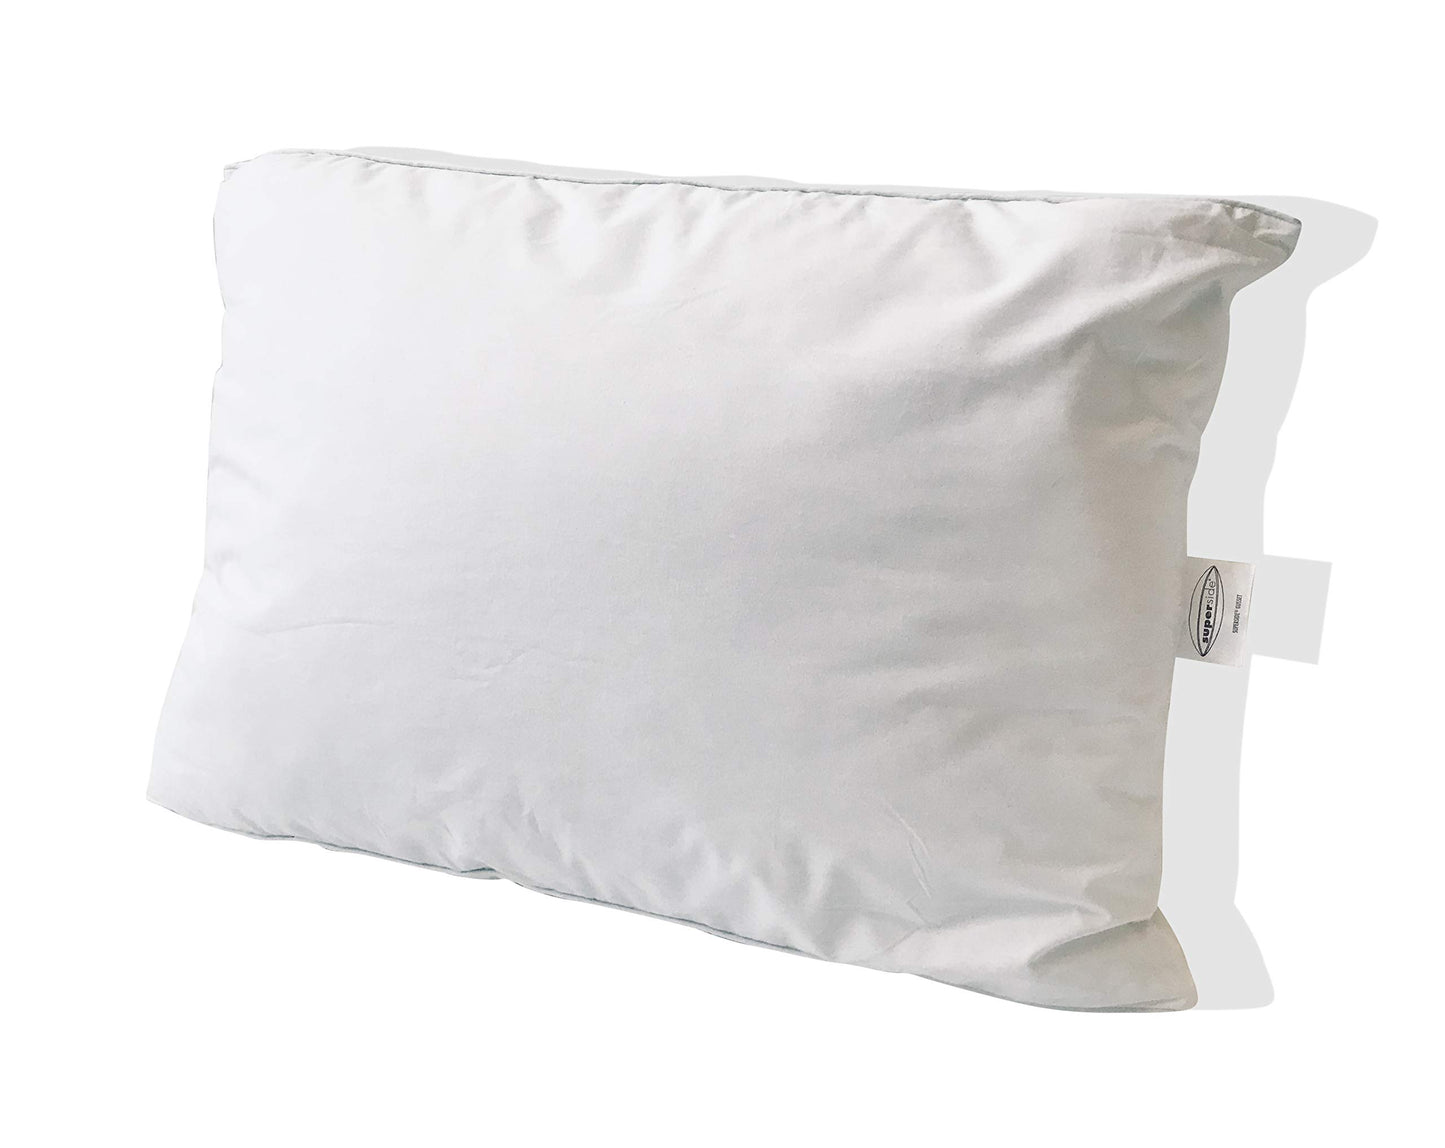 American Hotel Register - Registry Superside Gusseted 1 Queen Pillow